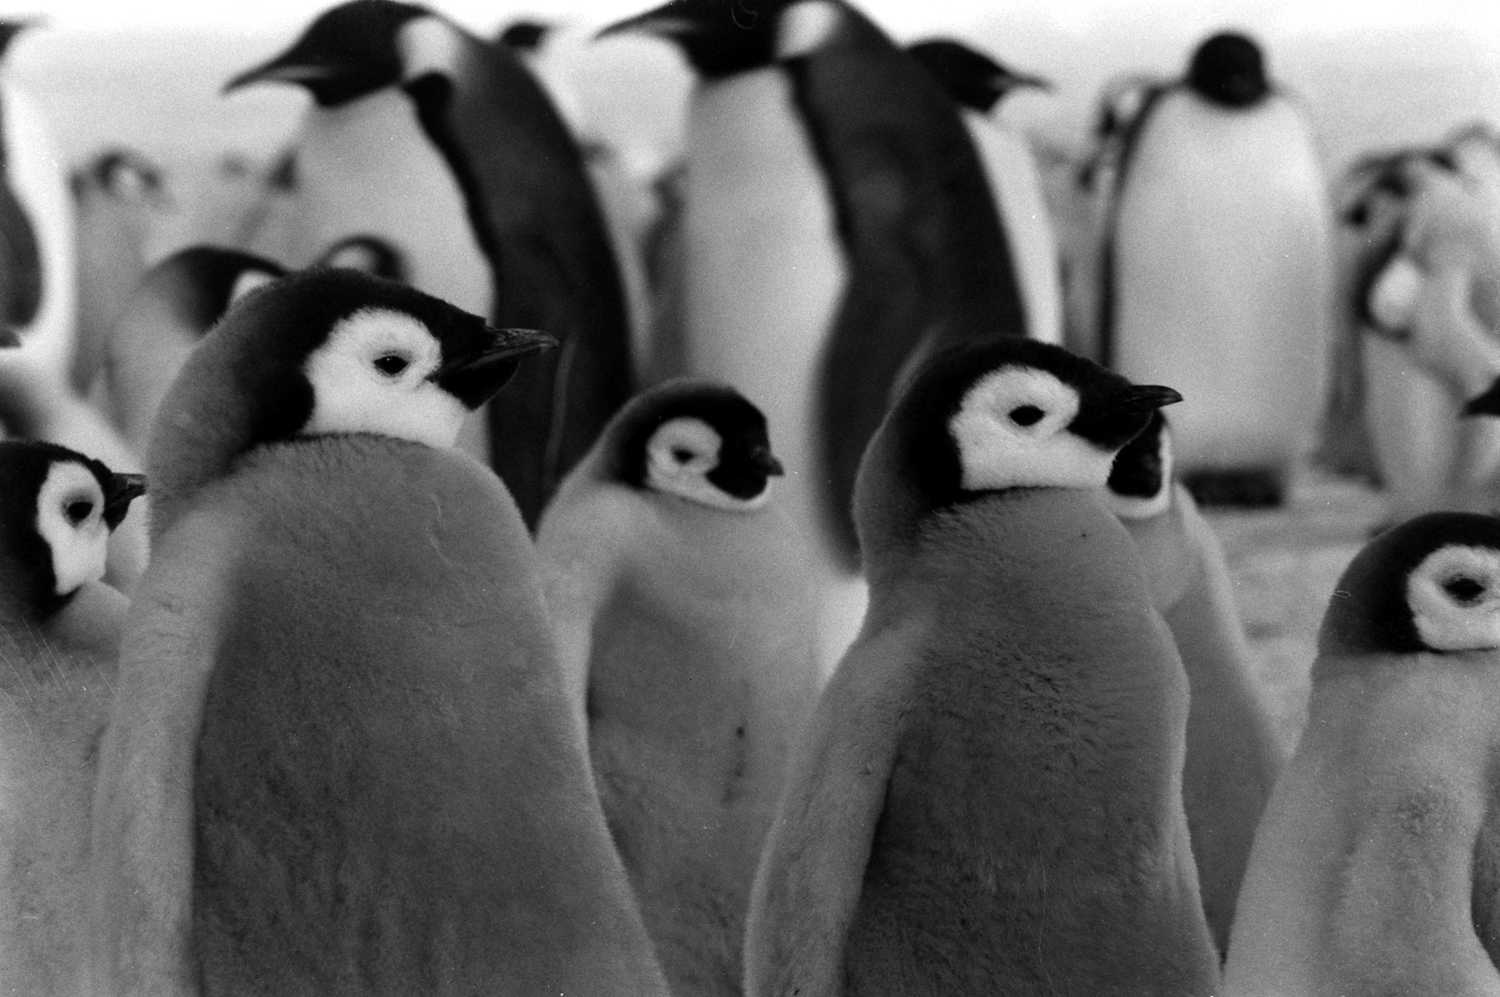 Antarctica, 1964.